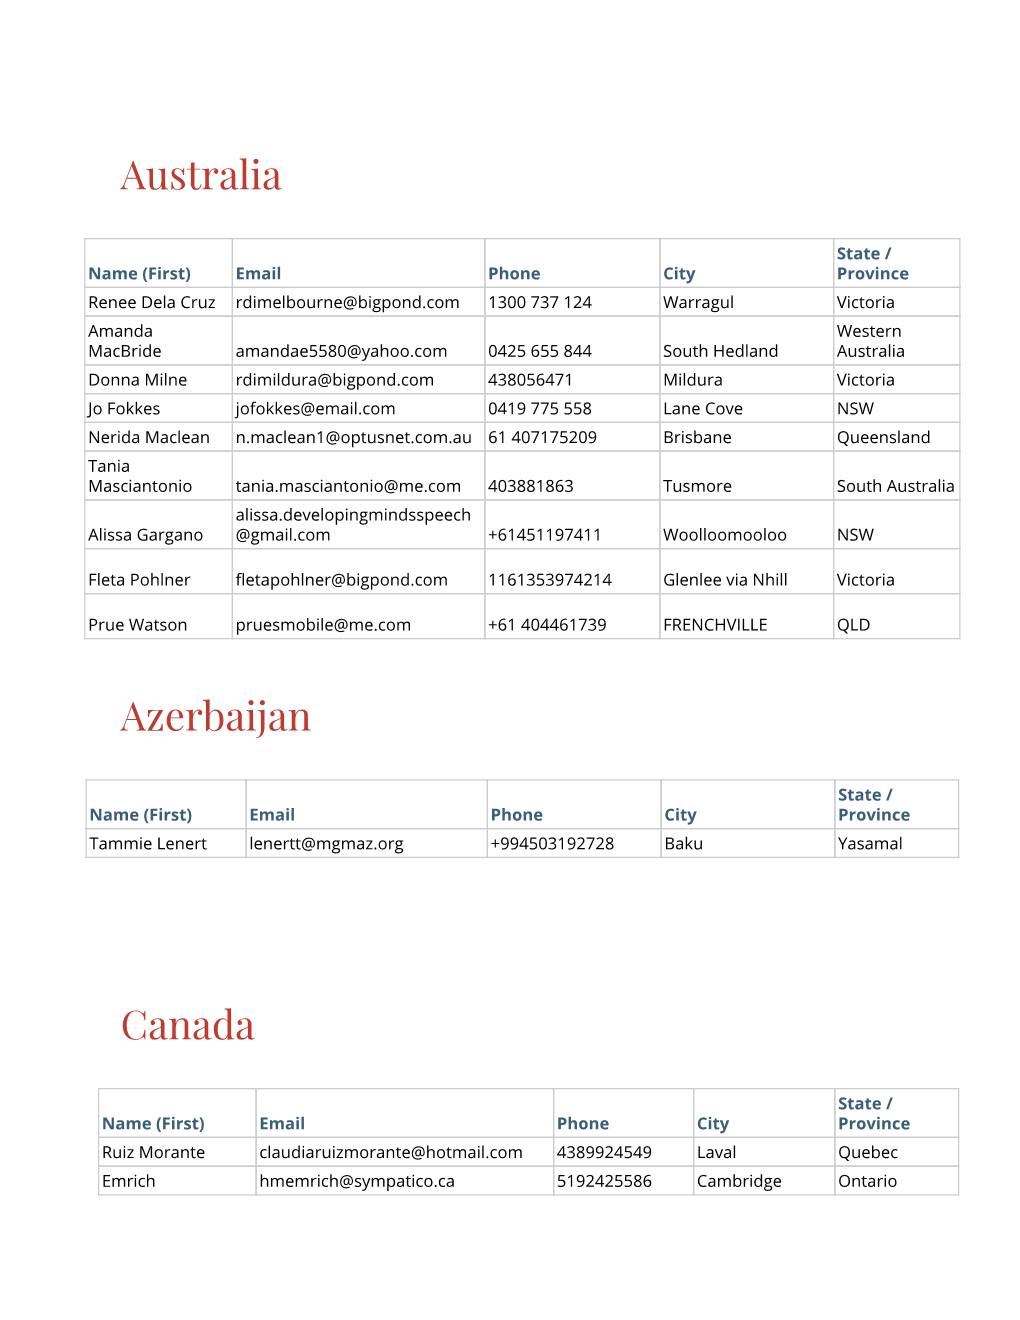 Australia Azerbaijan Canada